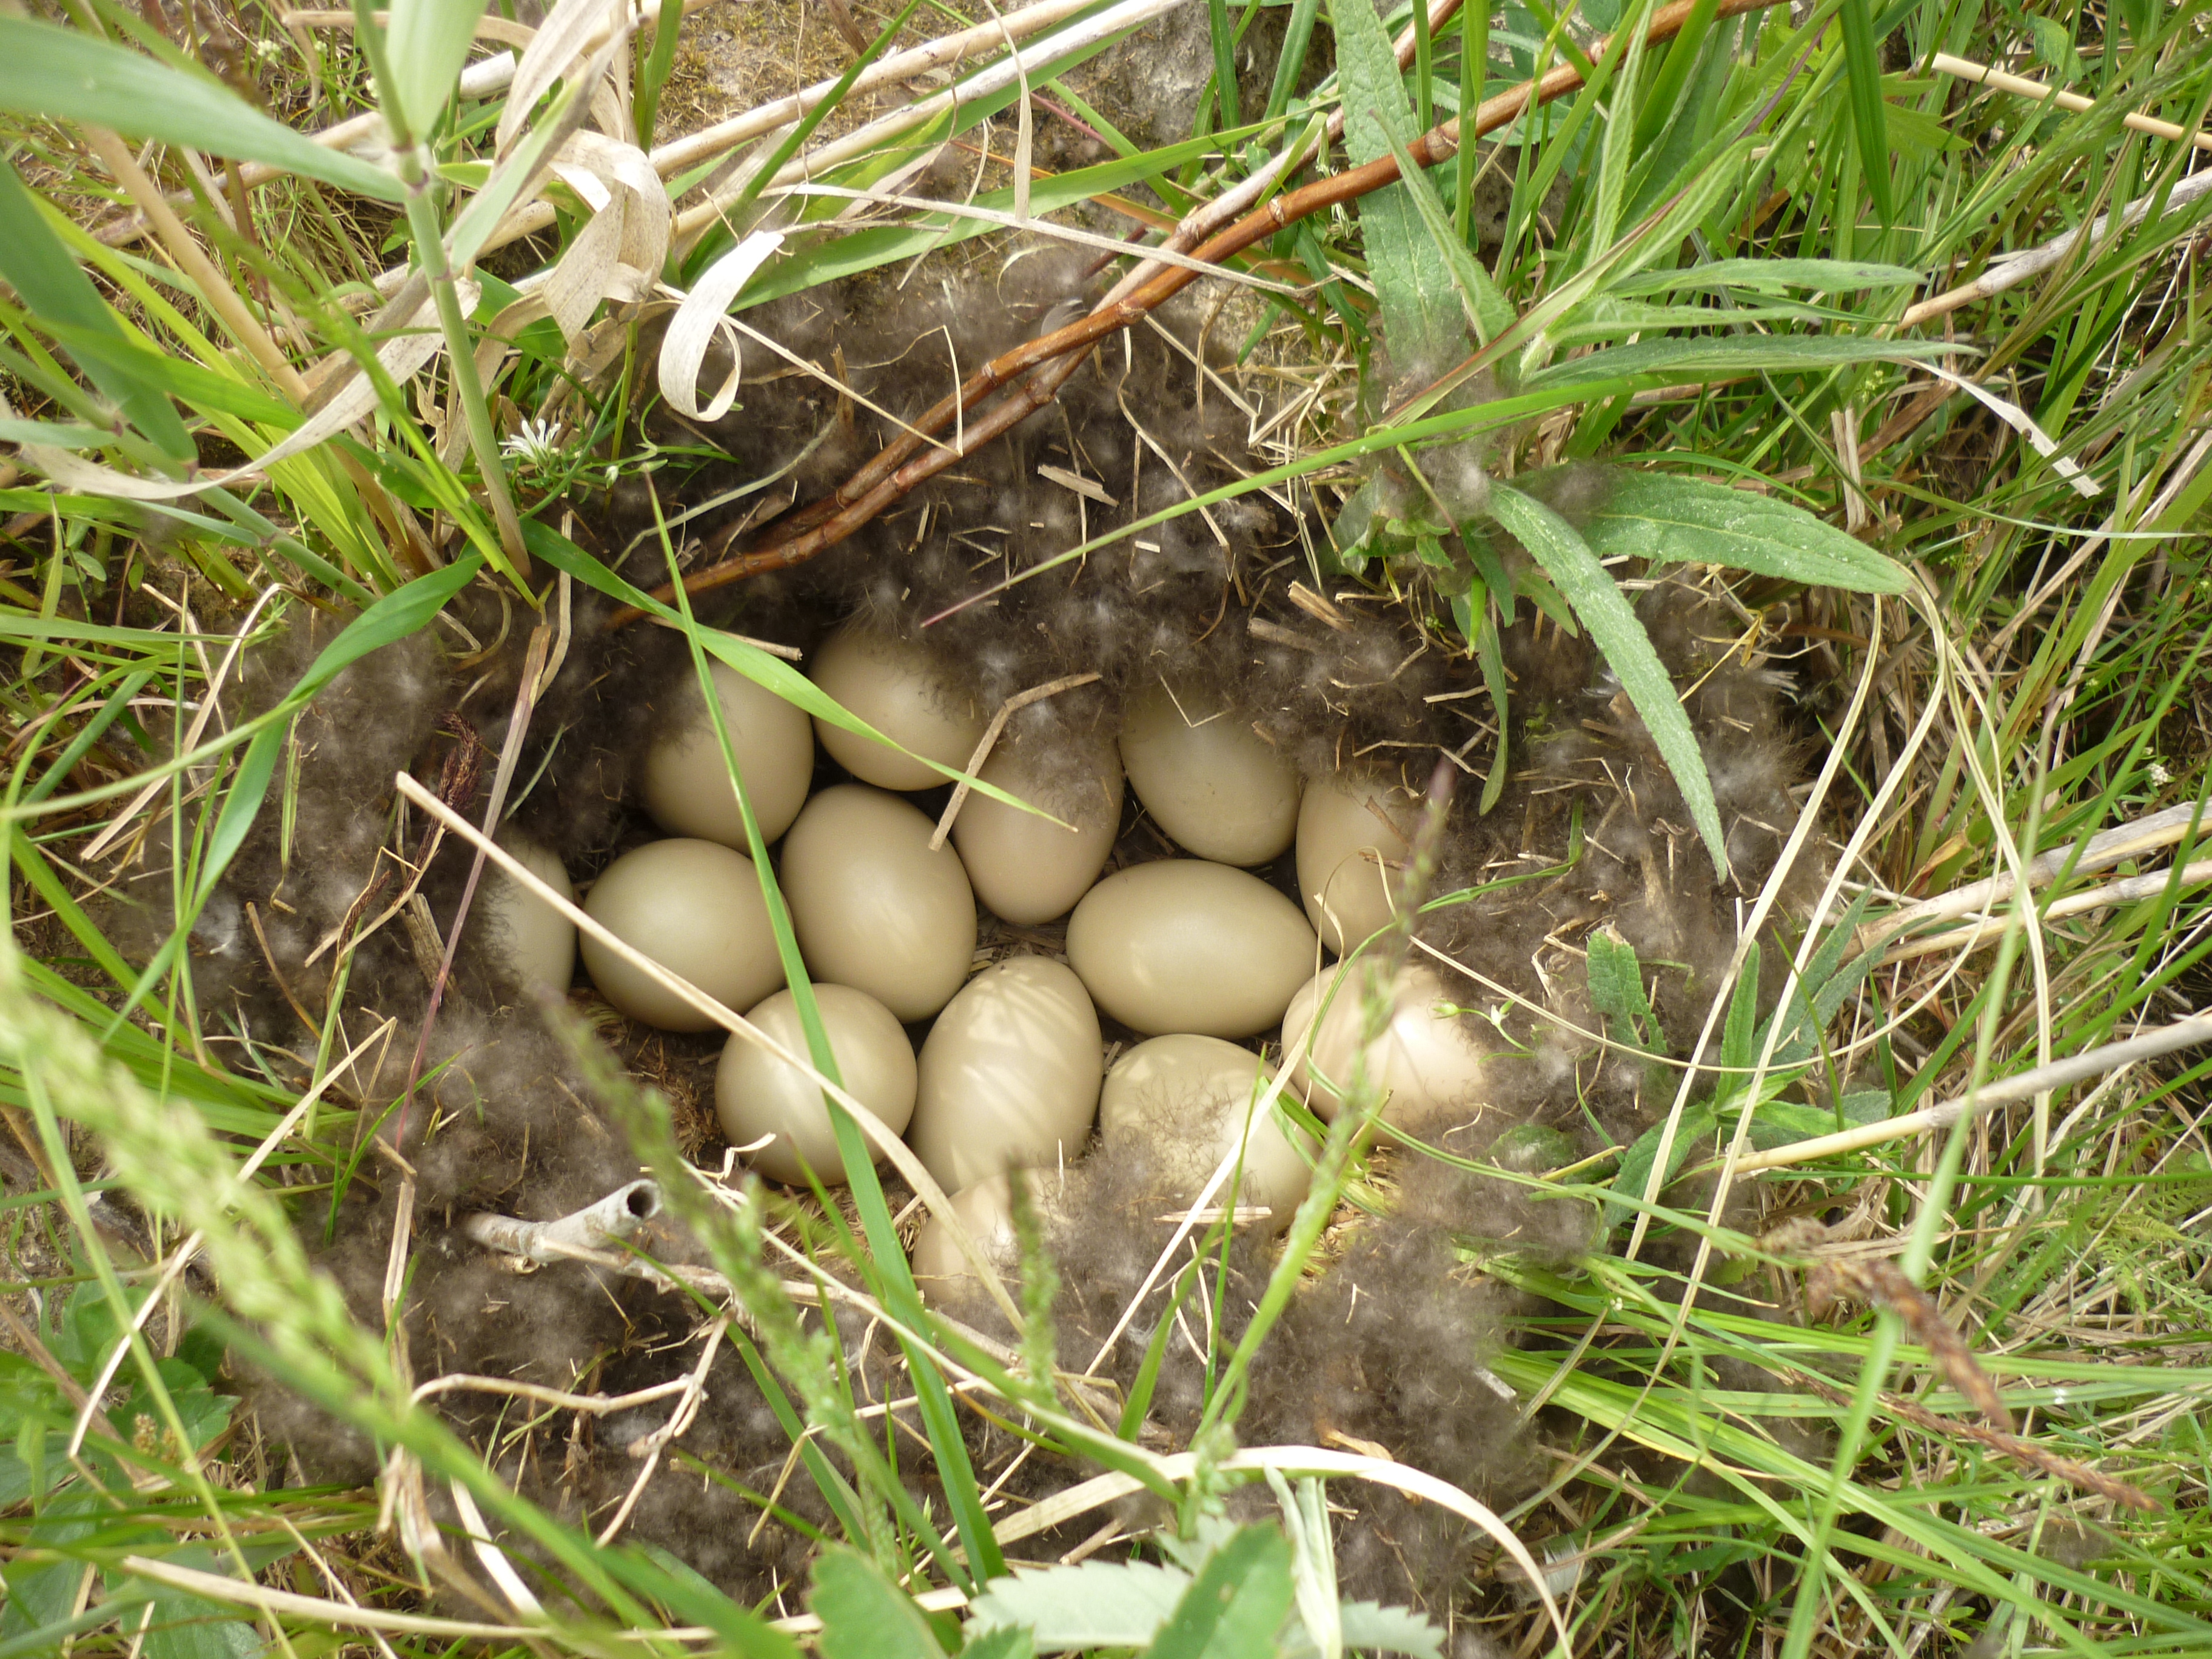 Гнездо для птиц, из луговых трав, Ø110*45мм, 52011004, TRIOL